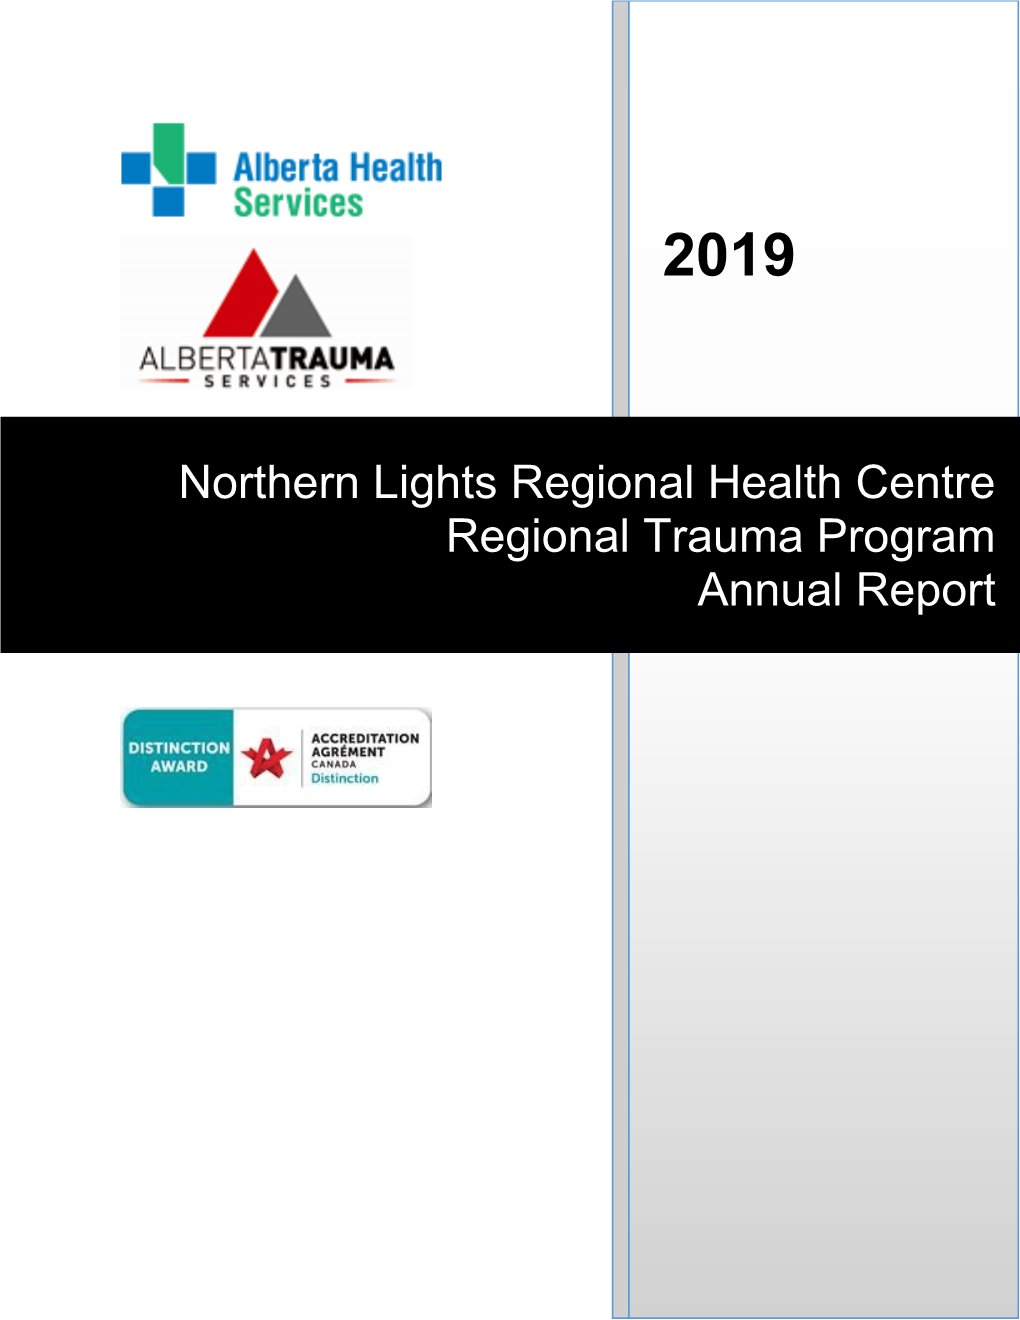 Northern Lights Regional Health Centre Regional Trauma Program